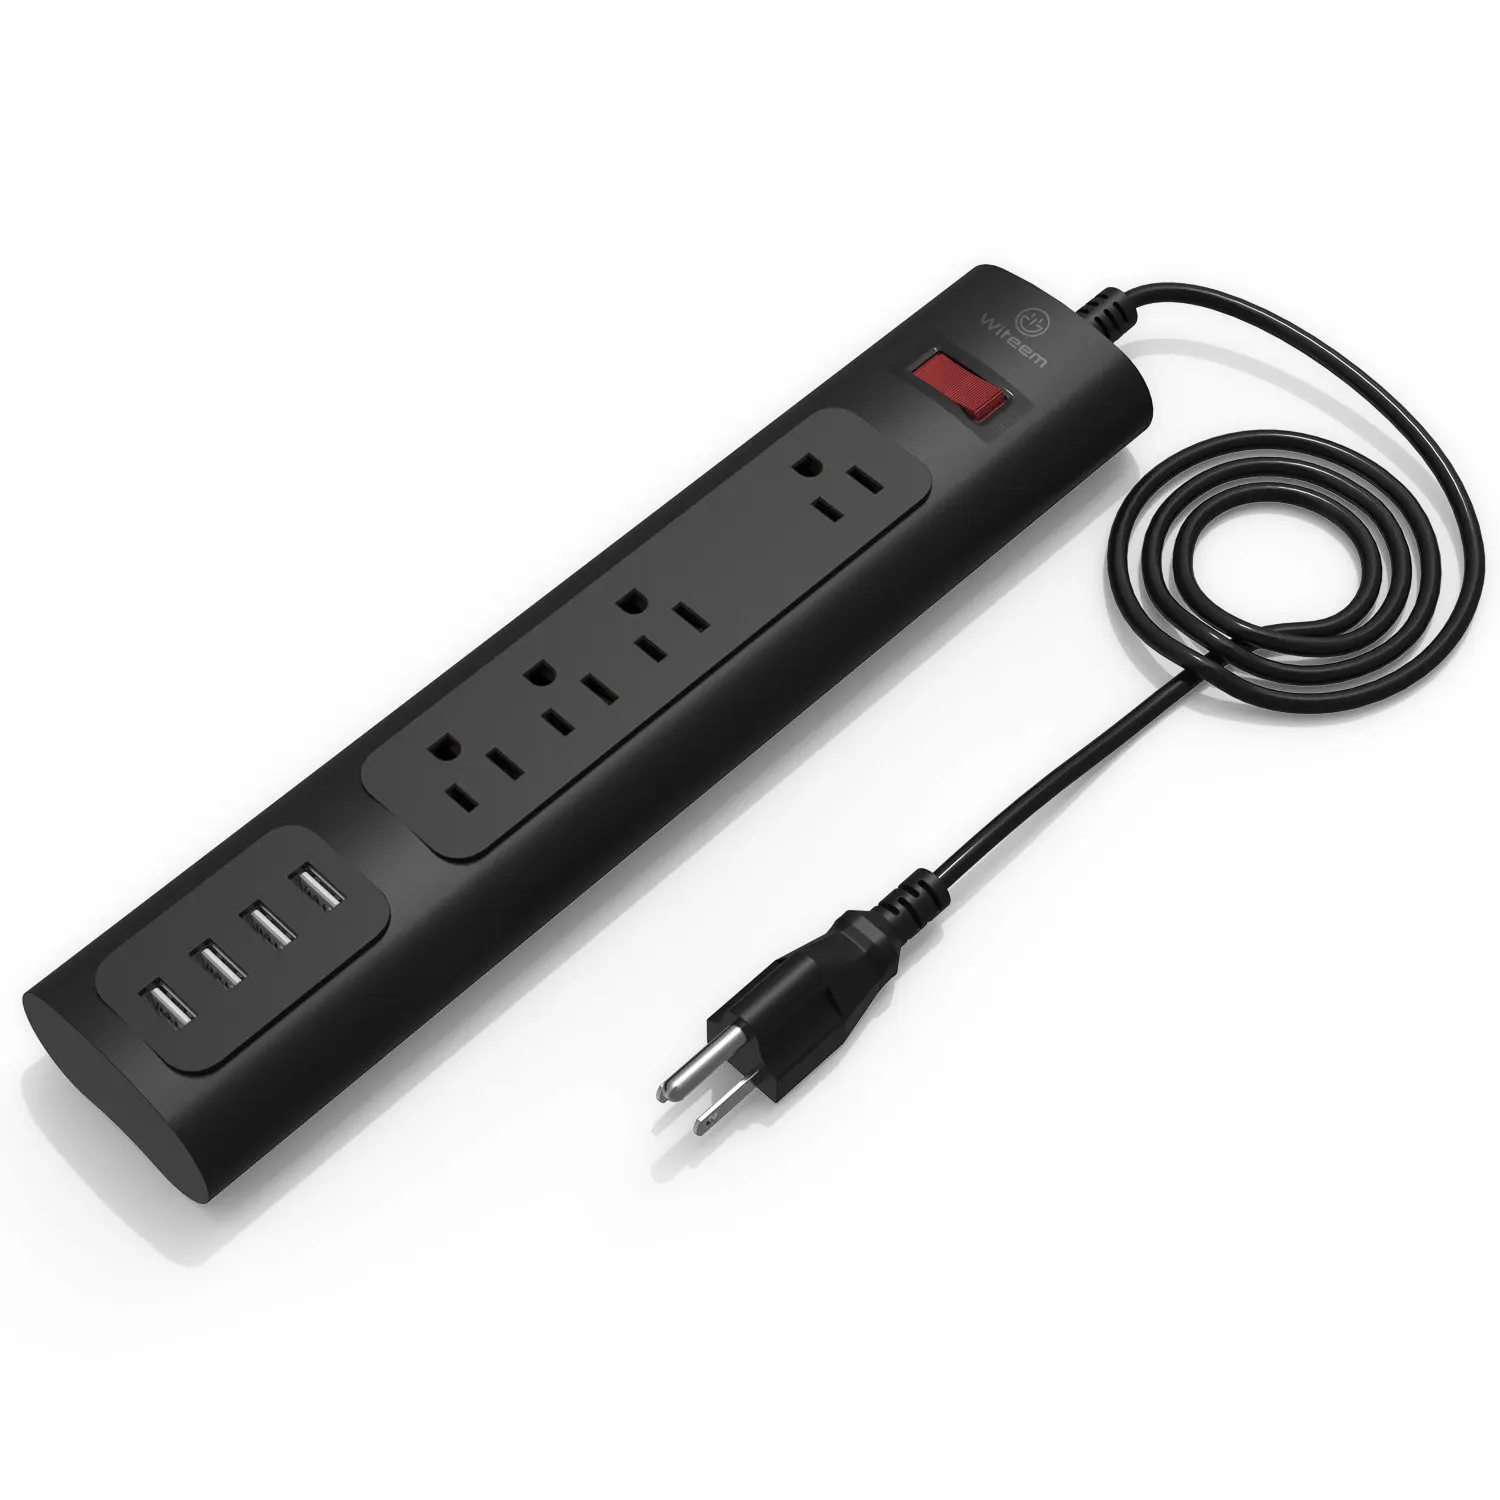 EcoStrip 1503E 2.0 Automatic Smart USB Energy Saving Surge Protector Power Strip 